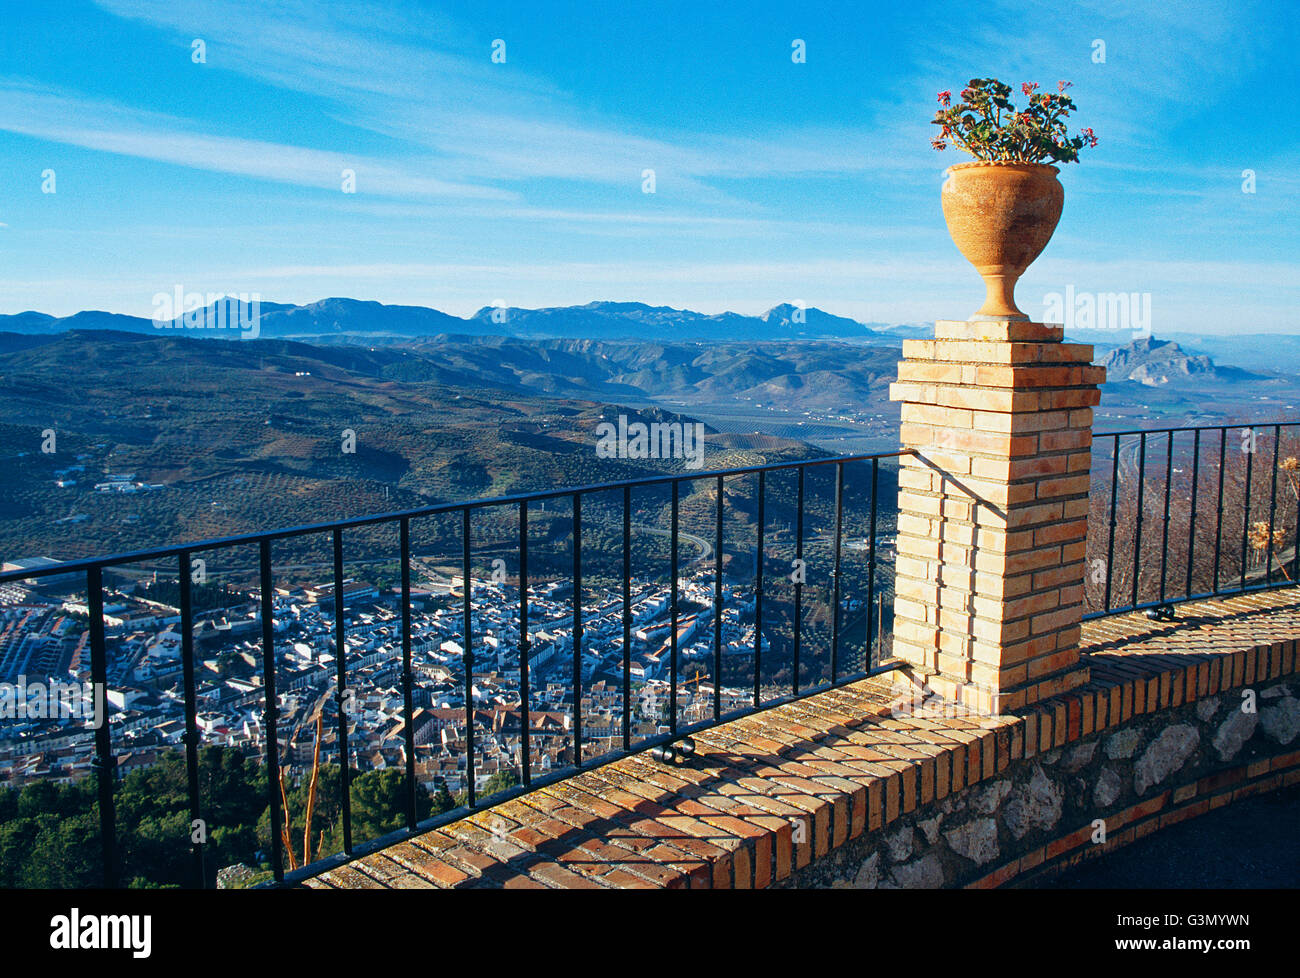 Vista desde el mirador. Archidona, Provincia de Málaga, Andalucía, España. Foto de stock